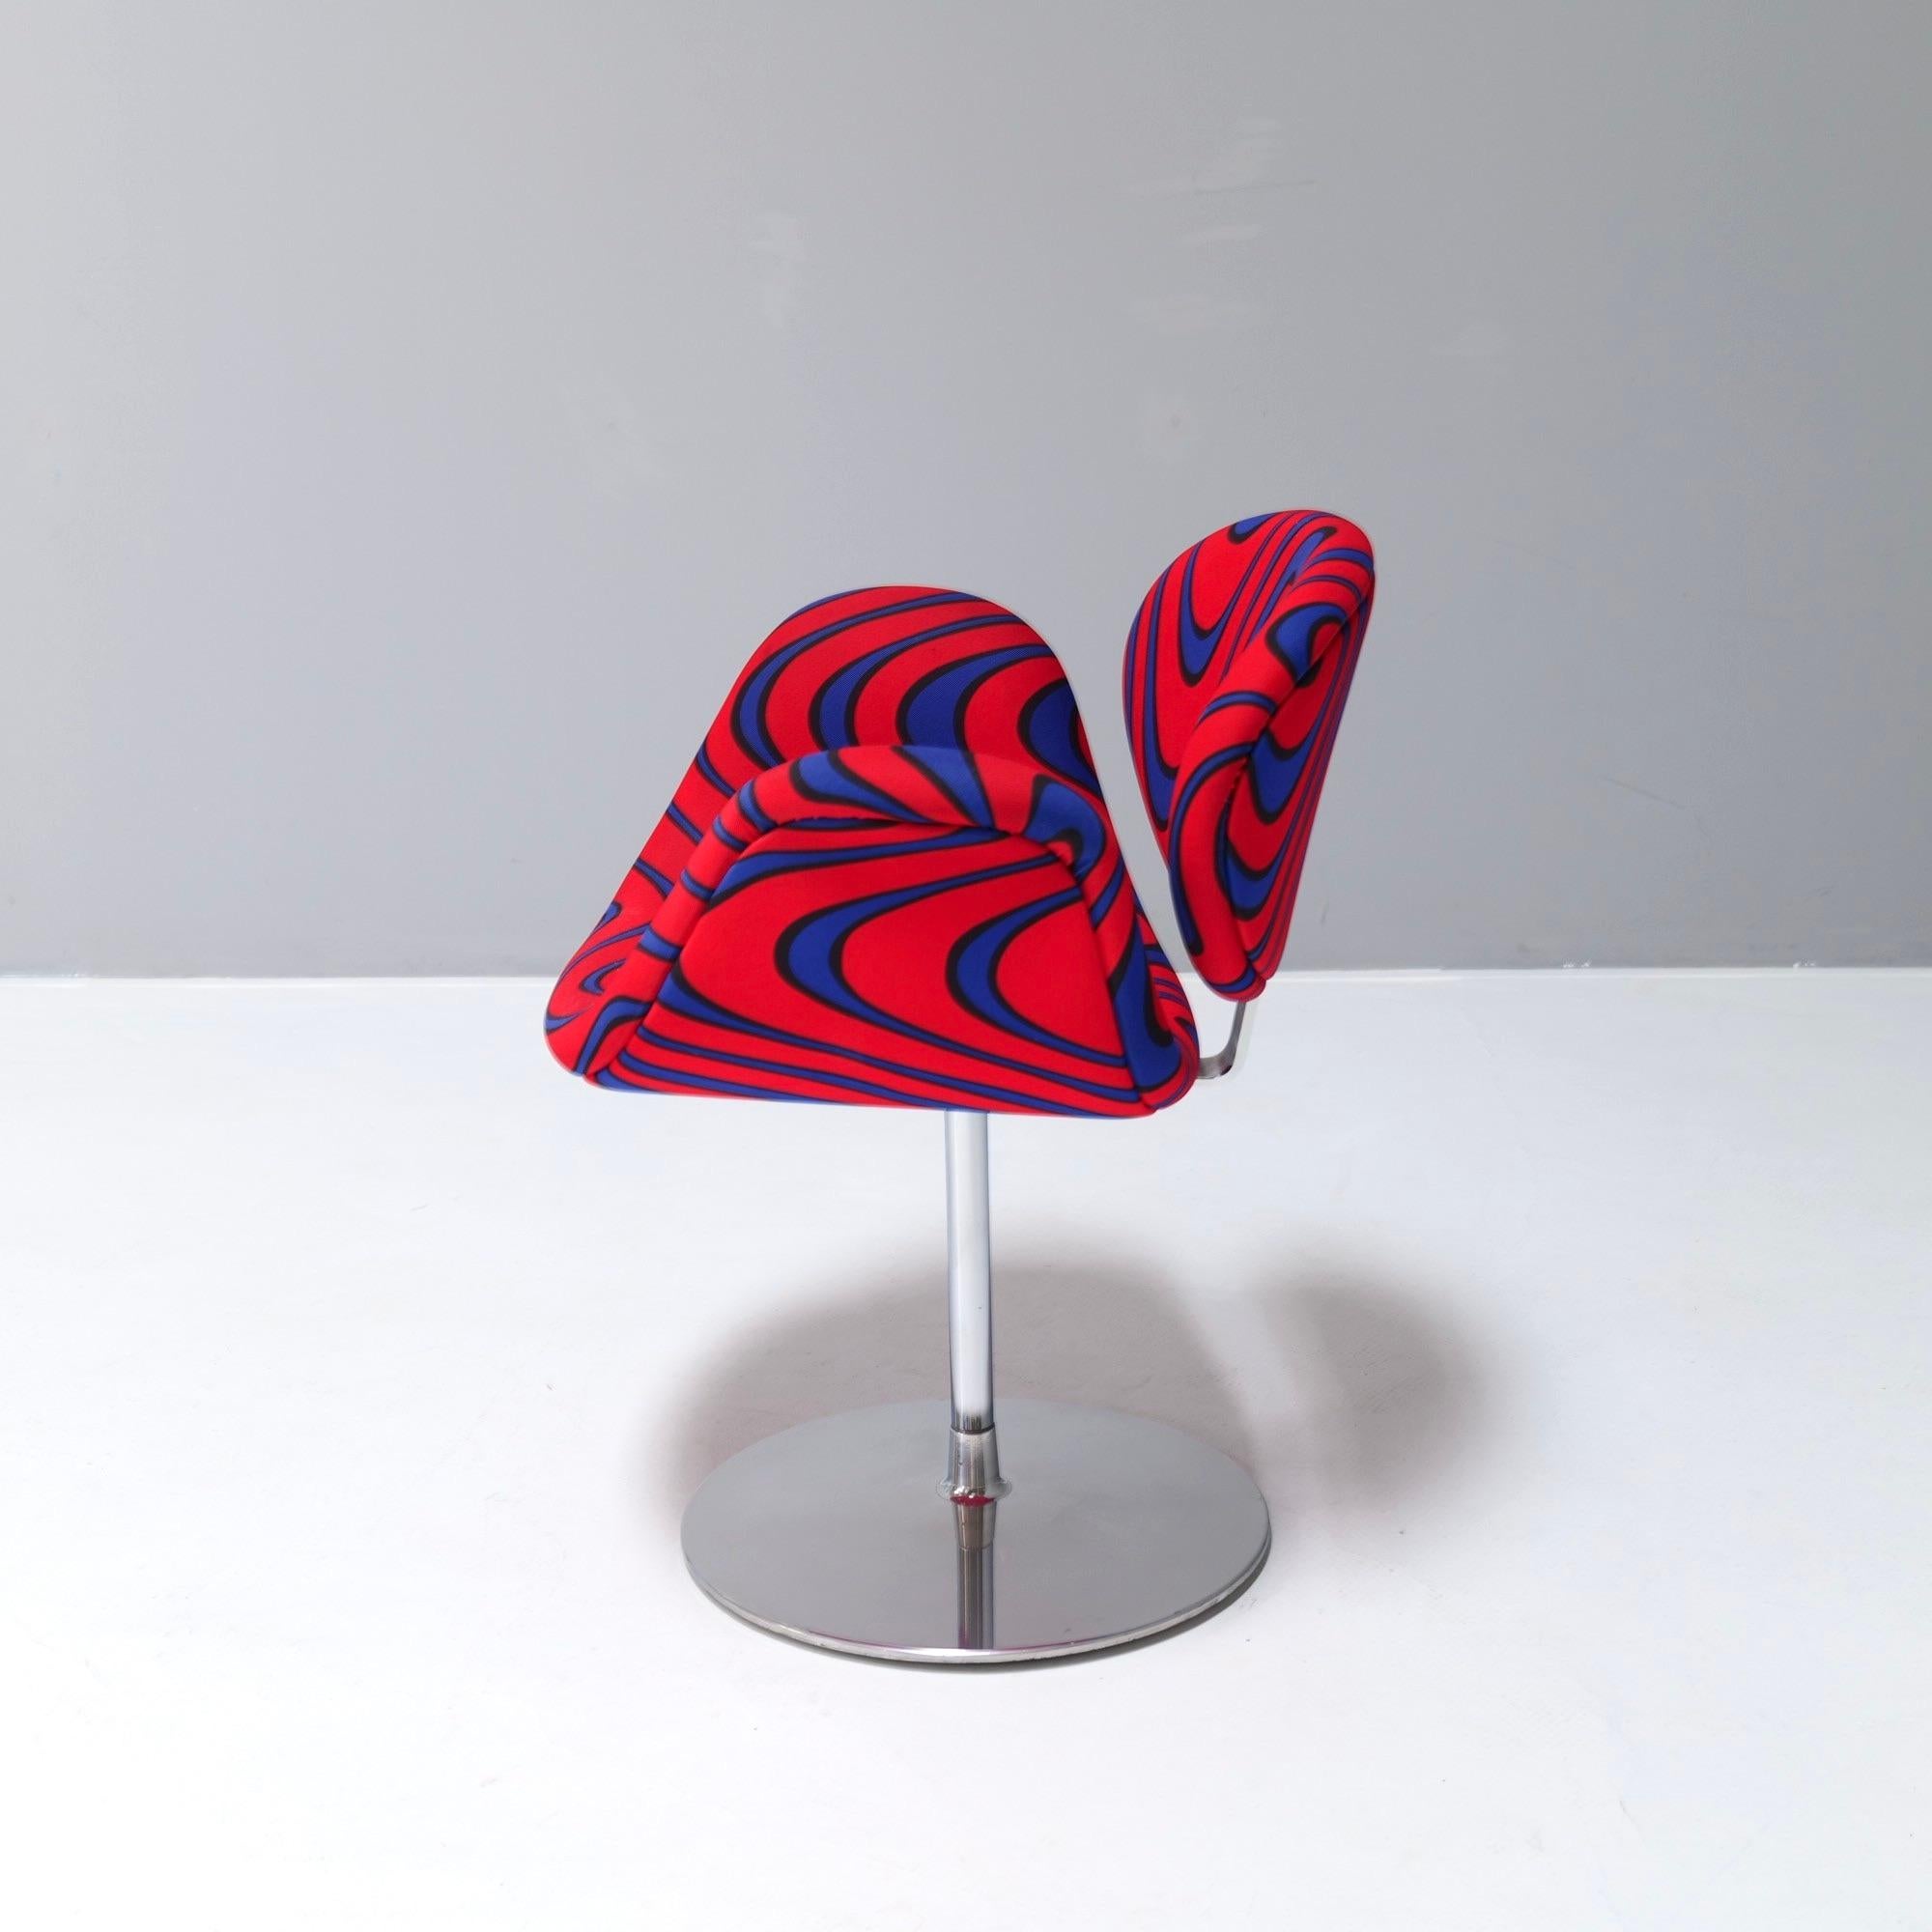 Rare Jack Lenor Larsen Mementum fabrics little Tulip chair.

Made by Artifort - Netherlands